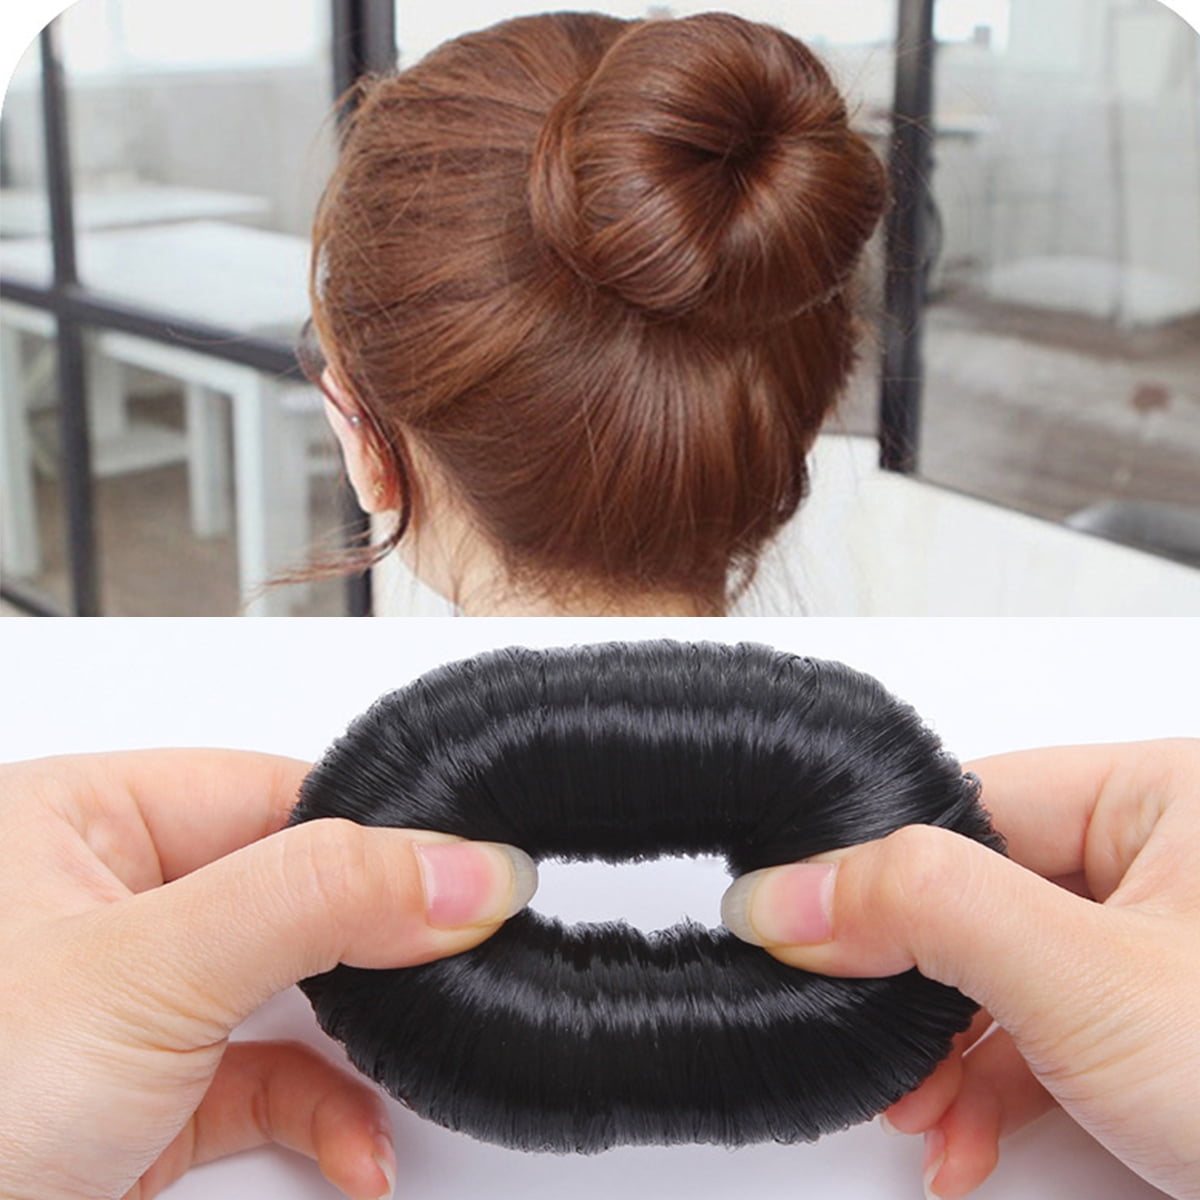 How to do a Ballerina bun on short 4c hair| No heat| Wedding hairstyle for  4c hair - YouTube